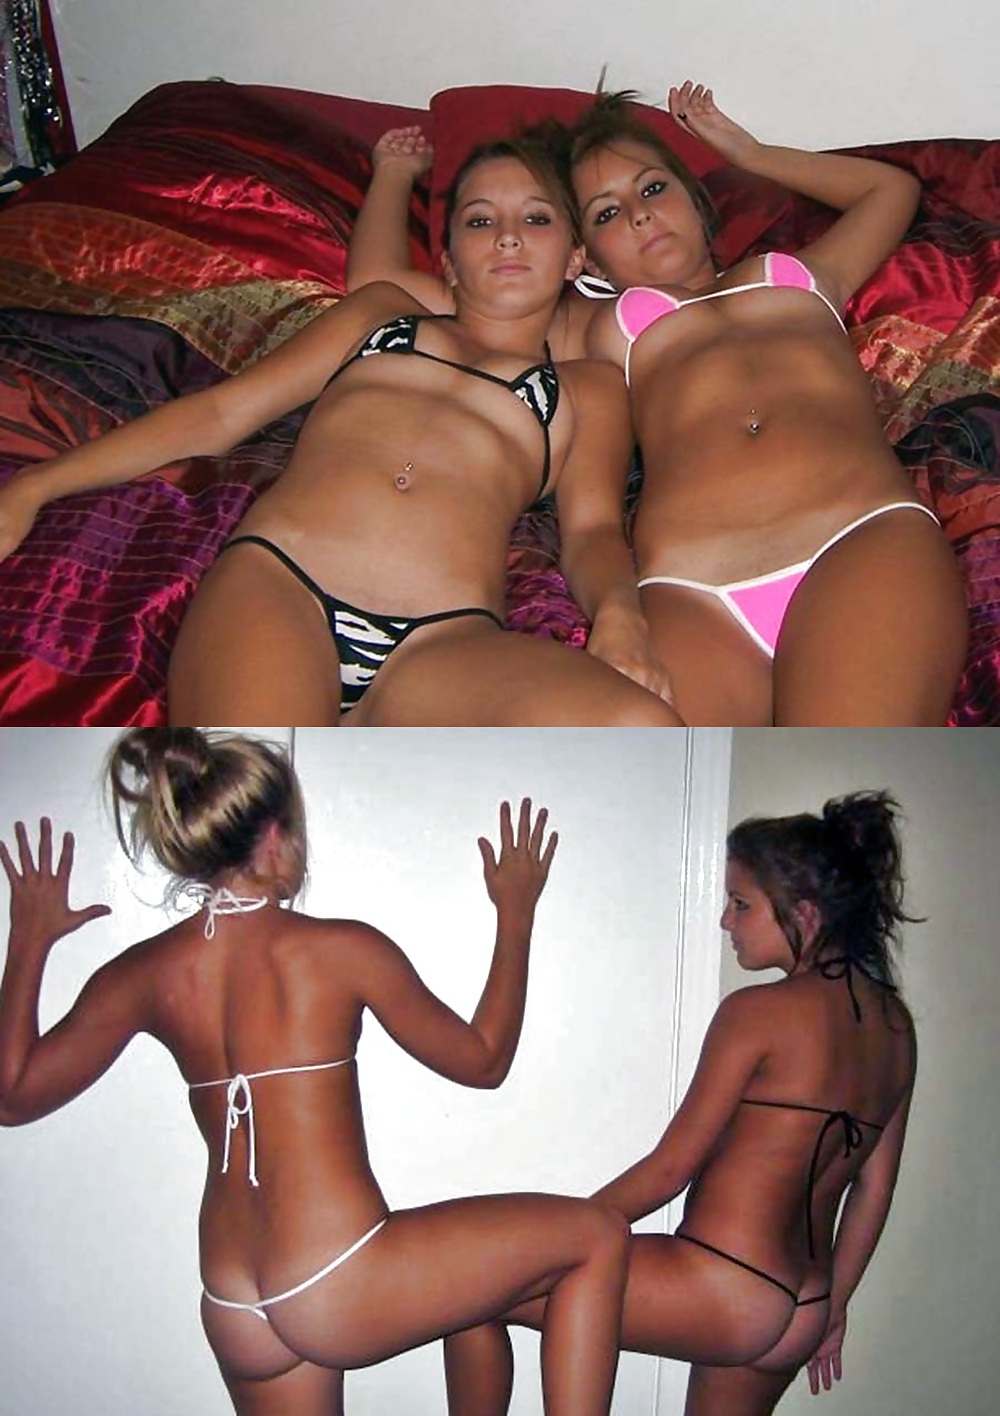 Bikini+Camel Toe+Tits= Erotica 9 By twistedworlds #16023947